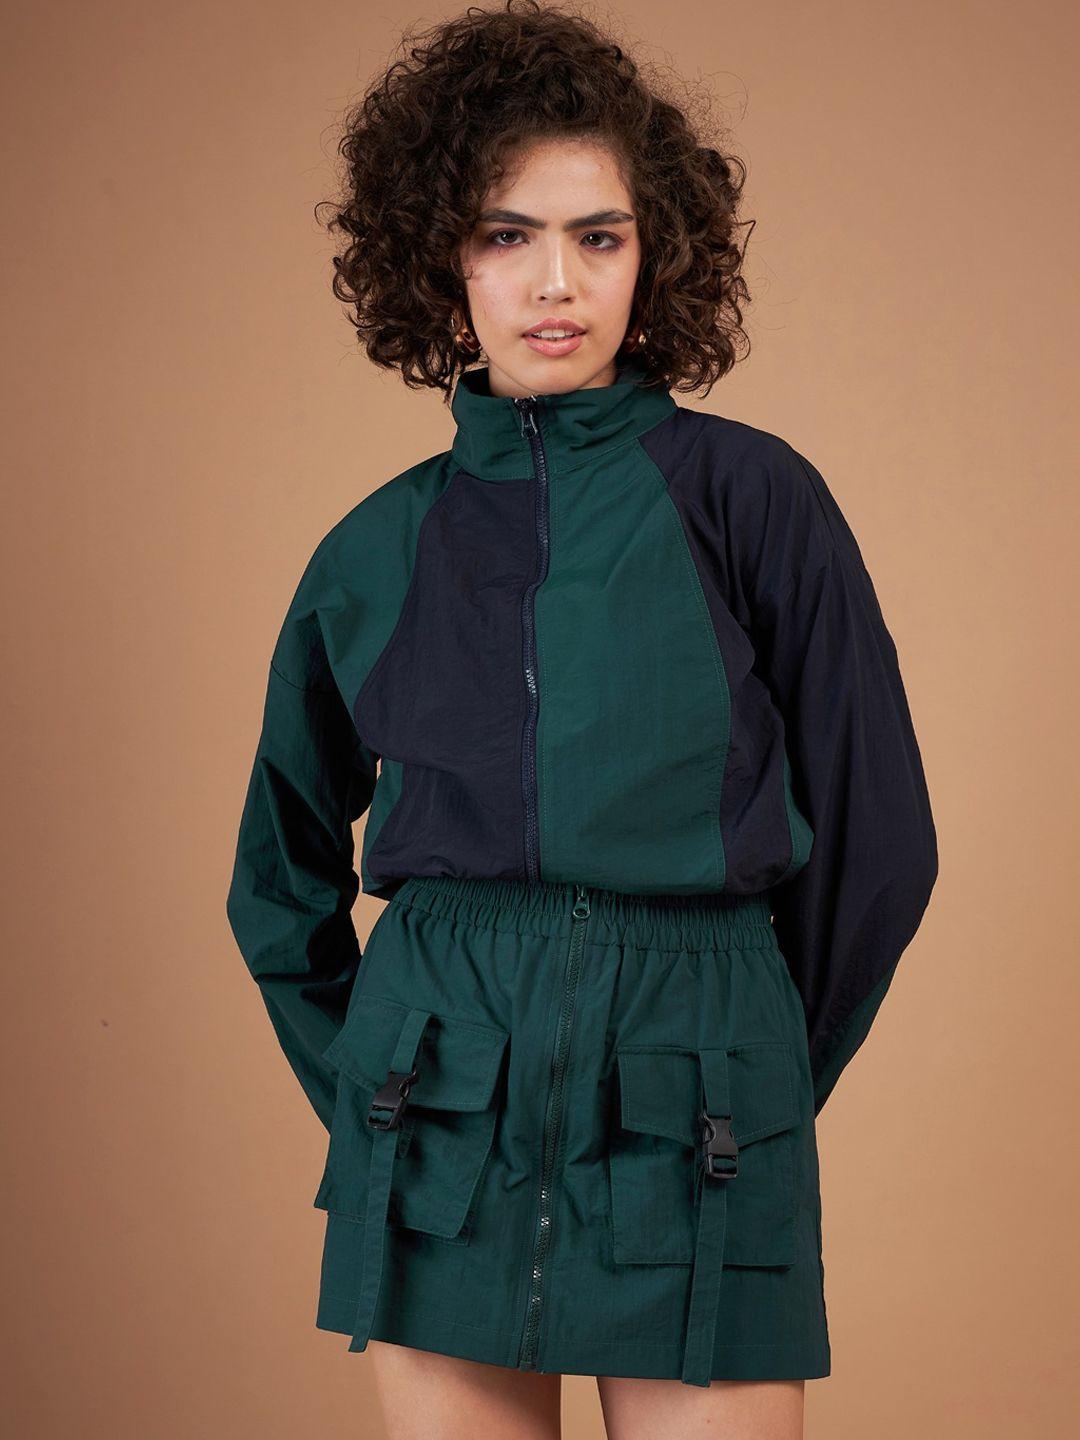 sassafras-green-colourblocked-mock-collar-bomber-jacket